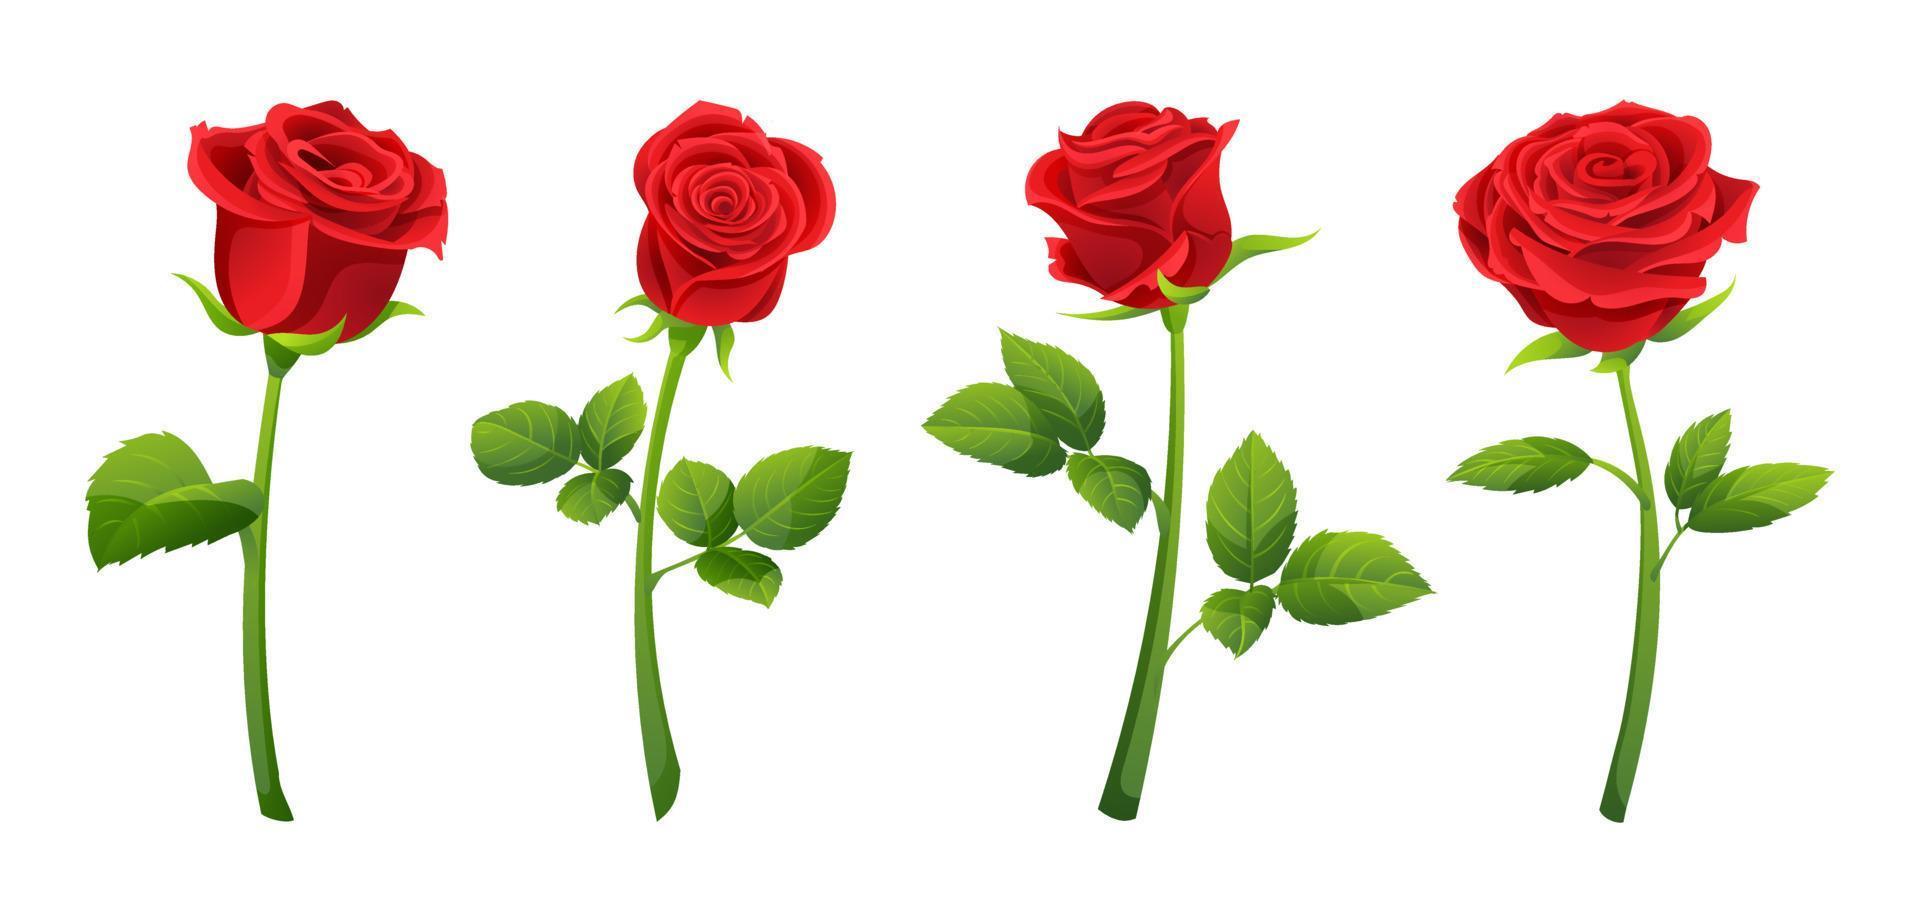 Set of red rose flowers vector illustration